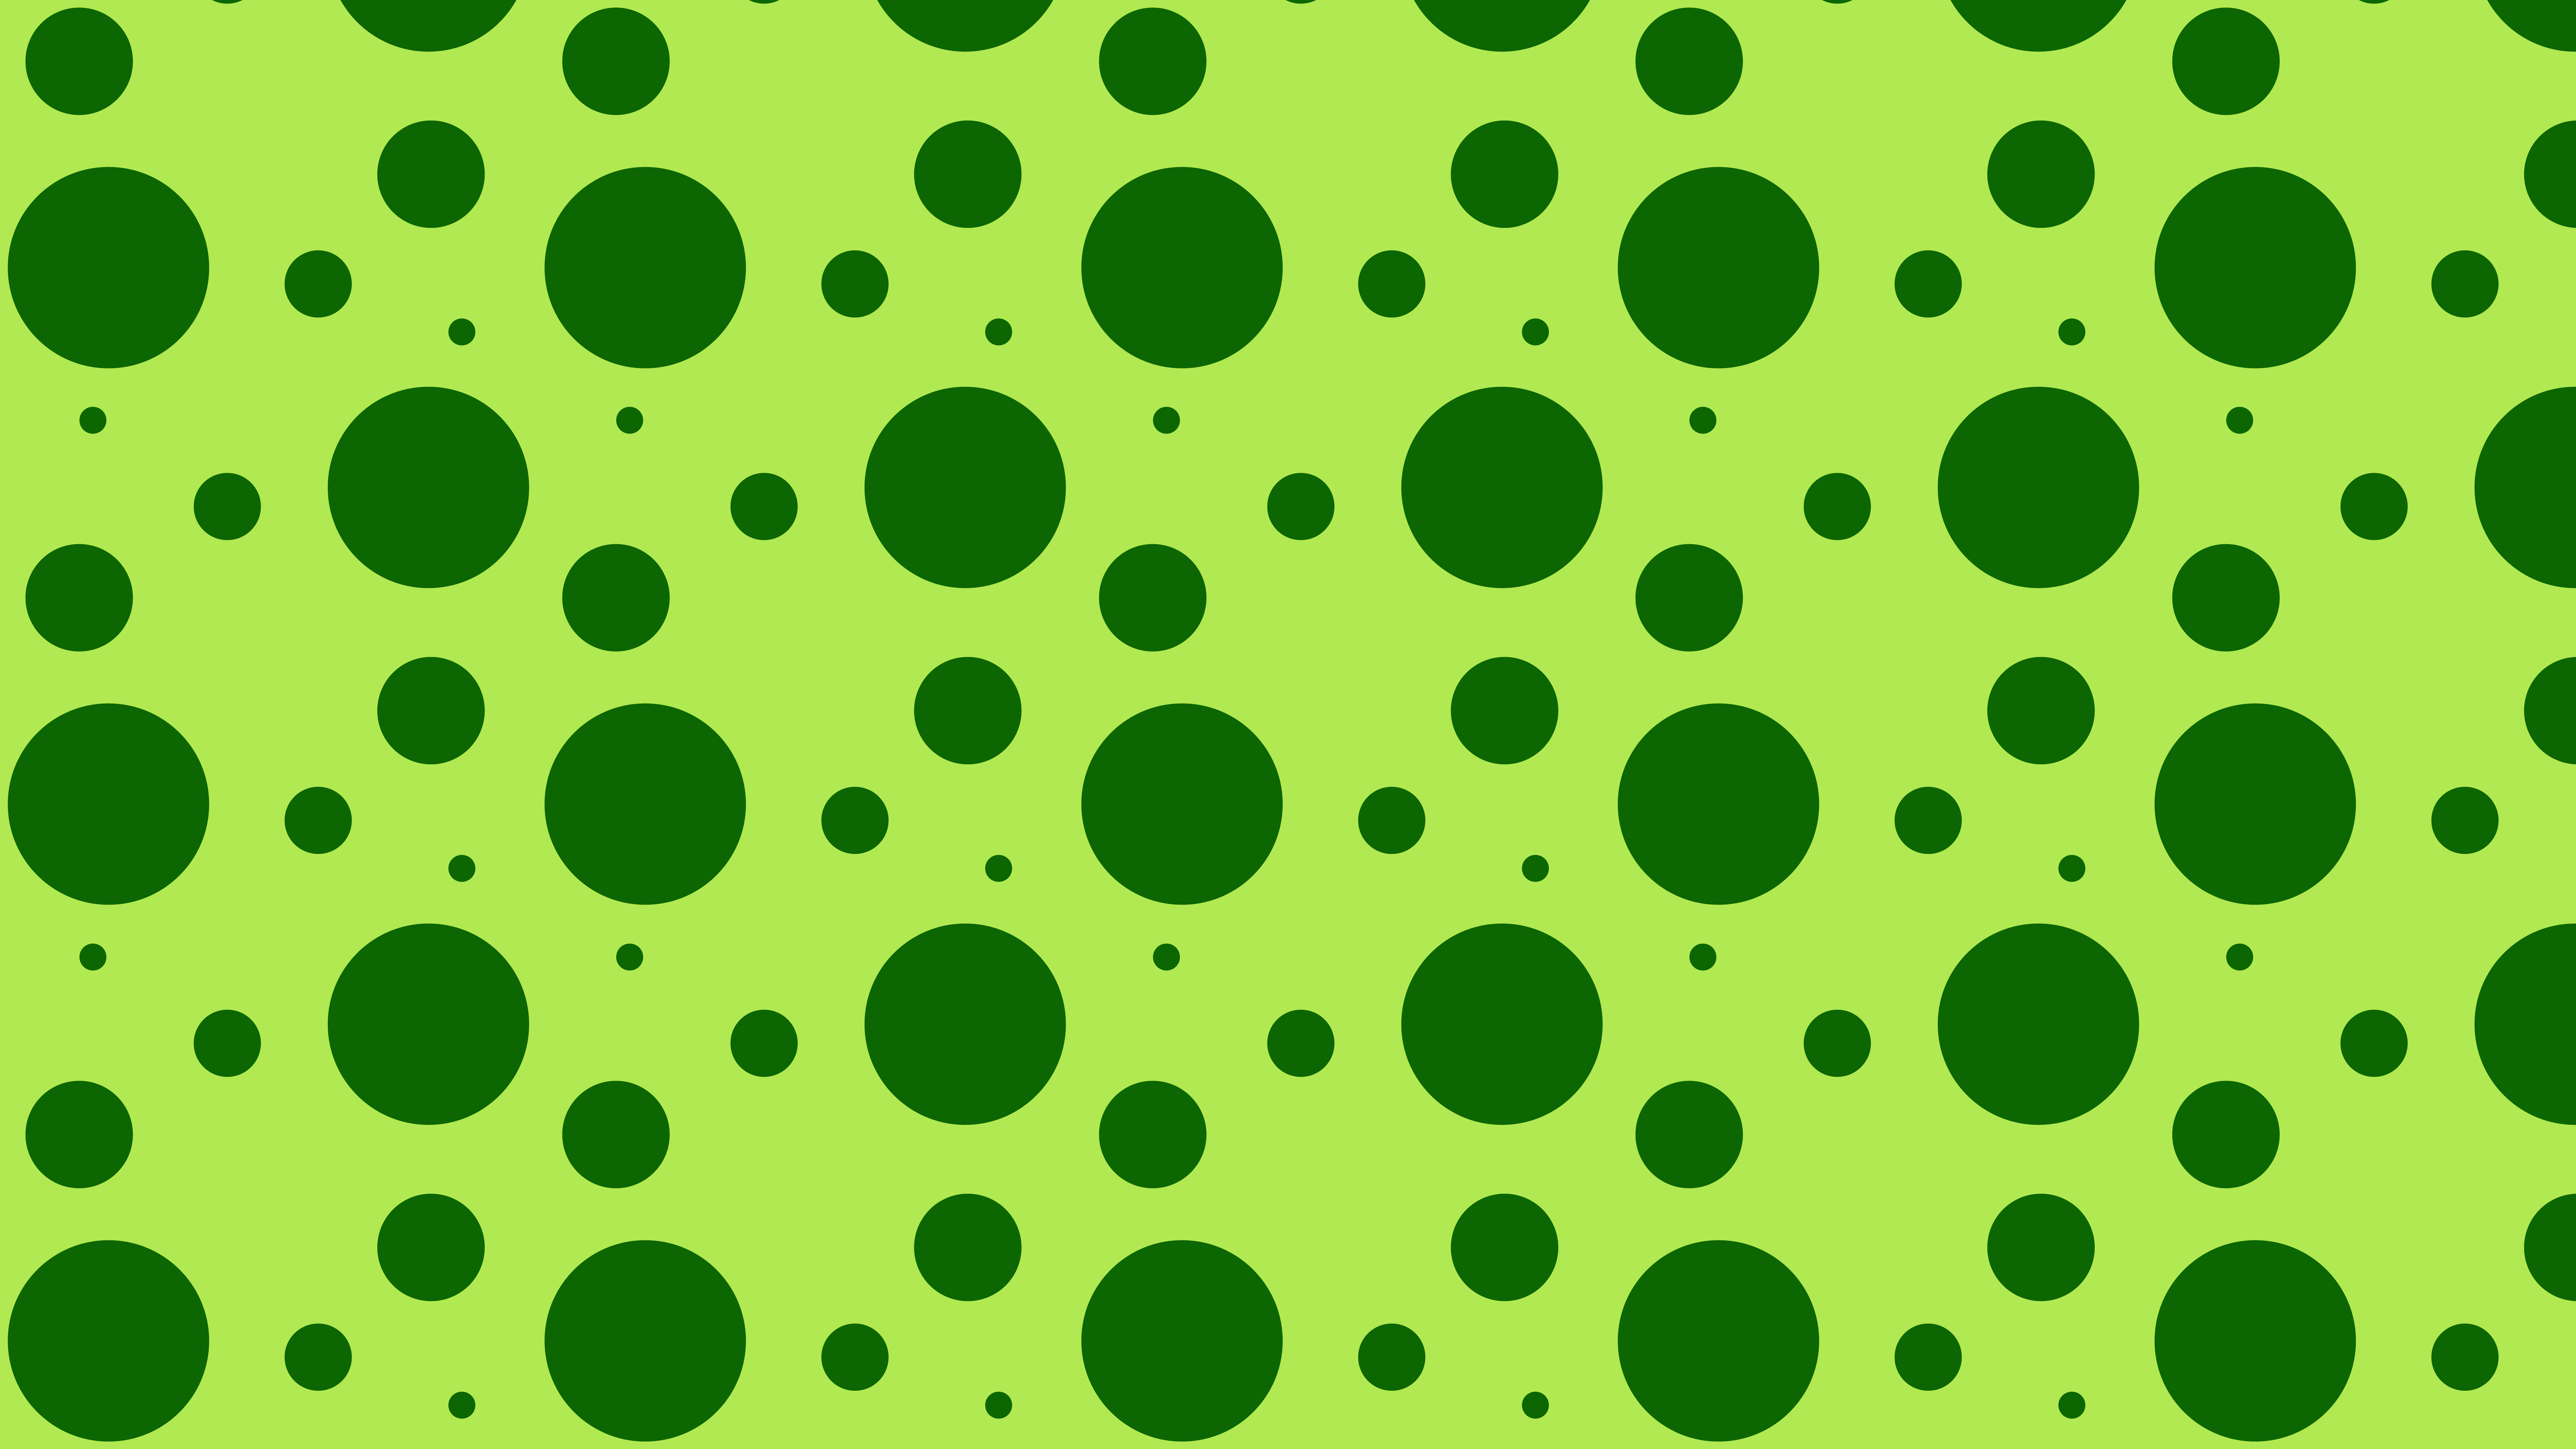 Free Green Random Circles Dots Background Pattern Image